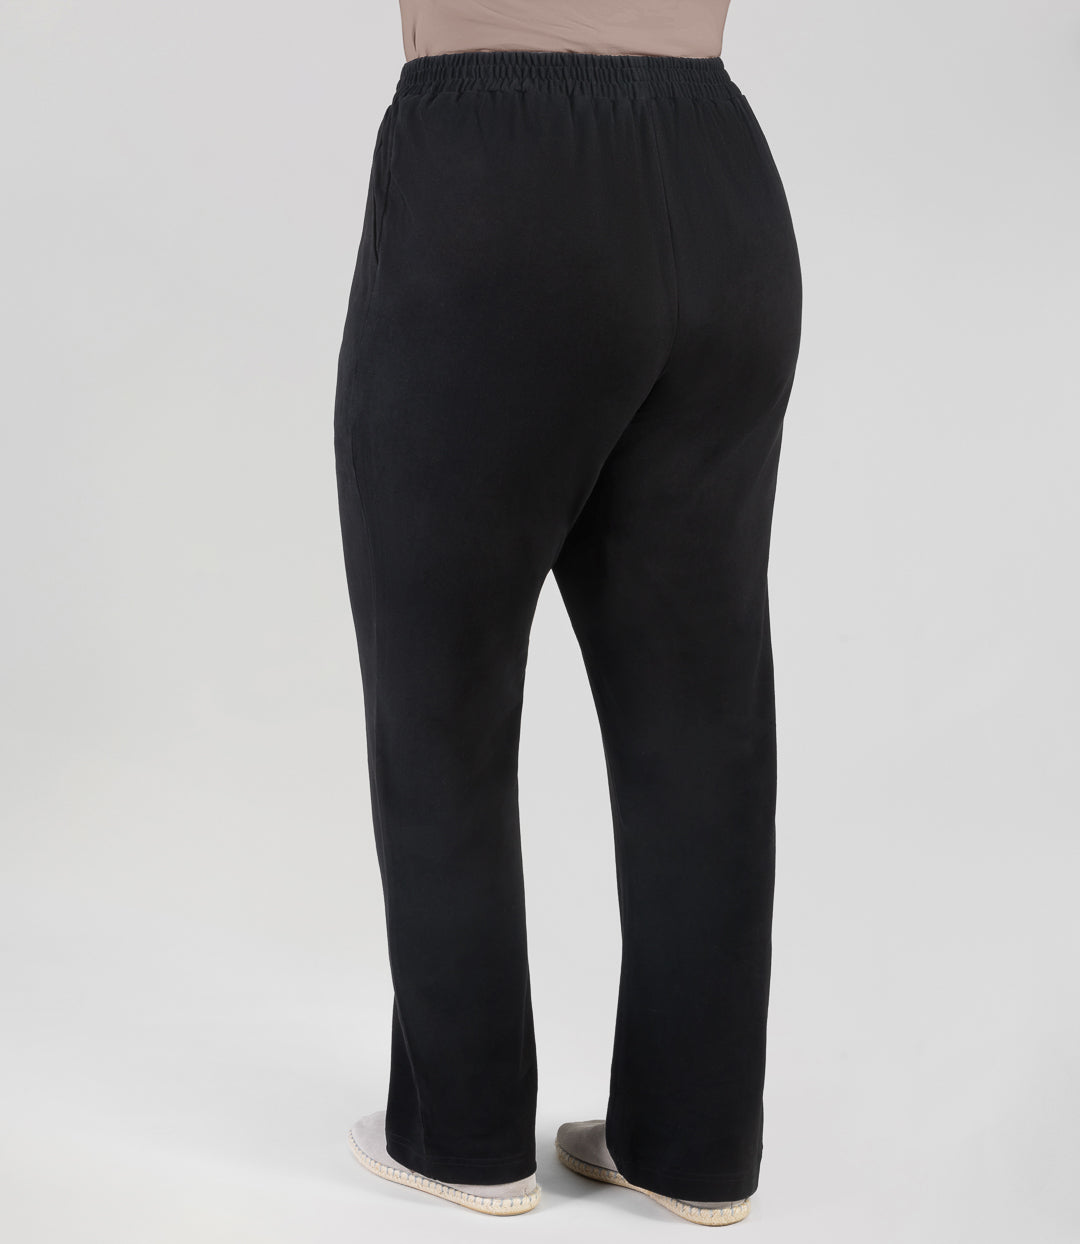 High Waisted Cotton Linen Bermuda Shorts for Womens Half Pants Floral  Printed Workout Yoga Short Athletic Shorts - Walmart.com